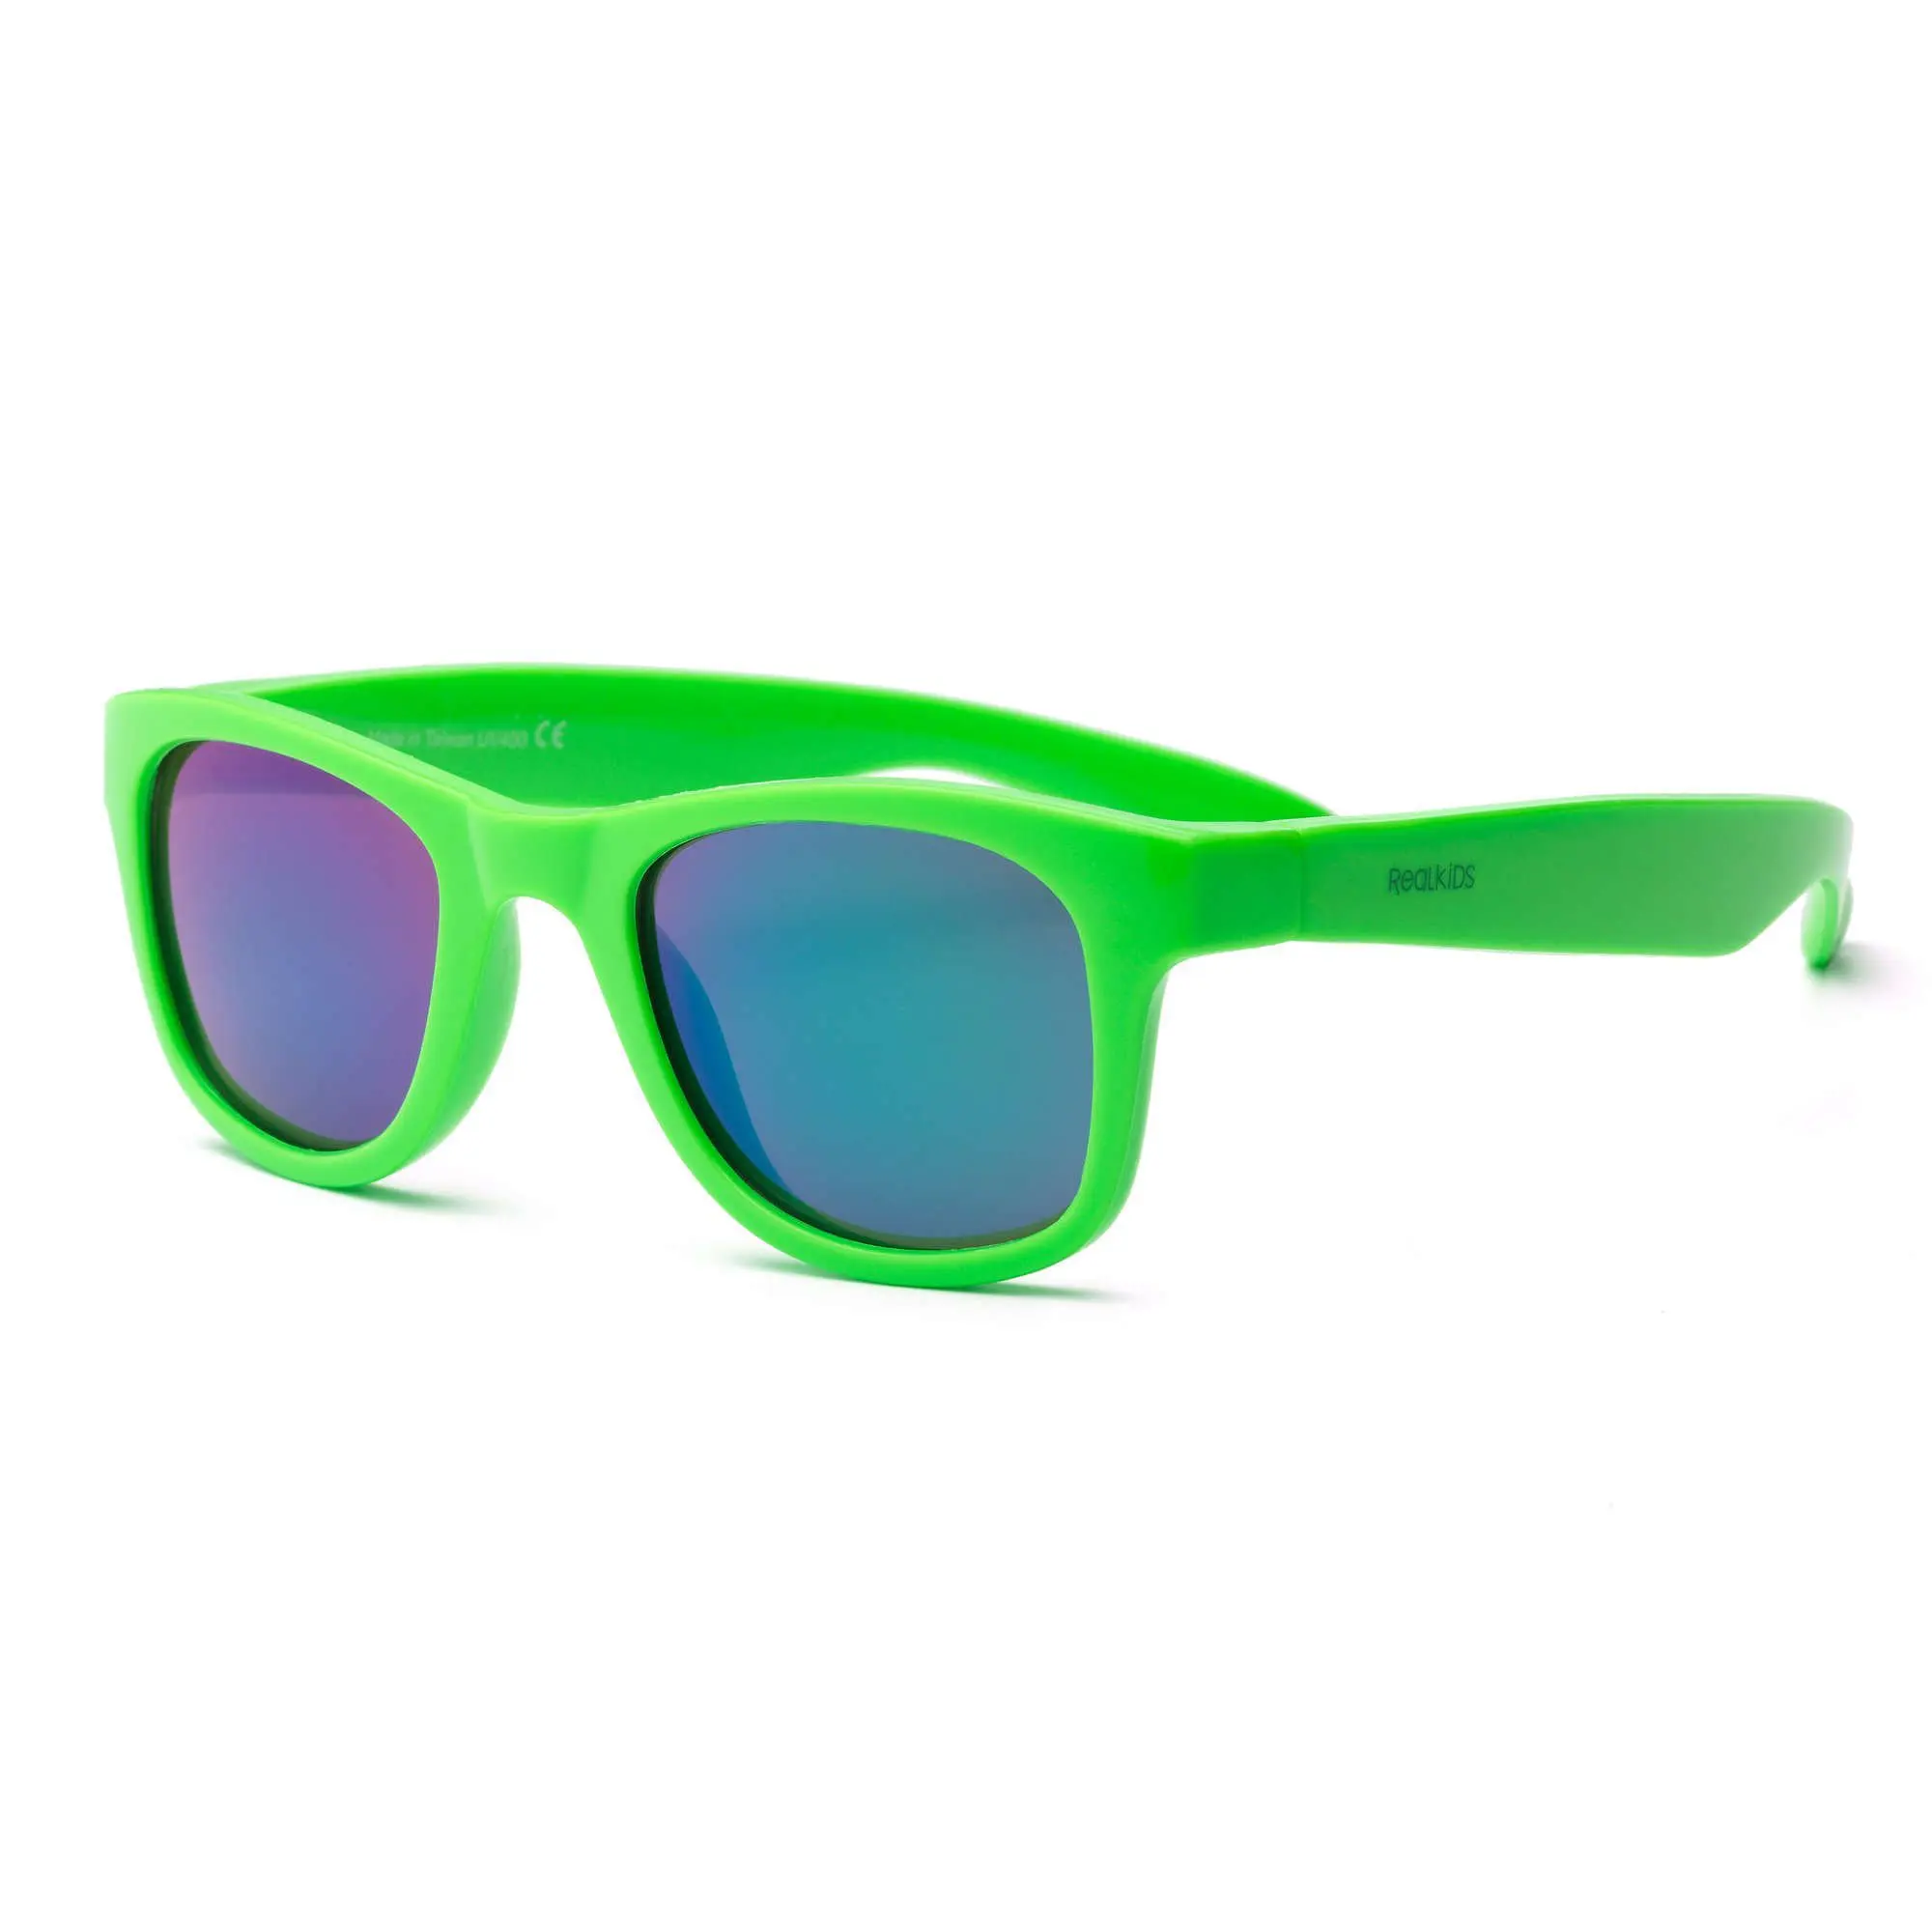 kids sunglasses Stylish Kids Sunglasses: Surf Sunglasses for Kids from Real Shades